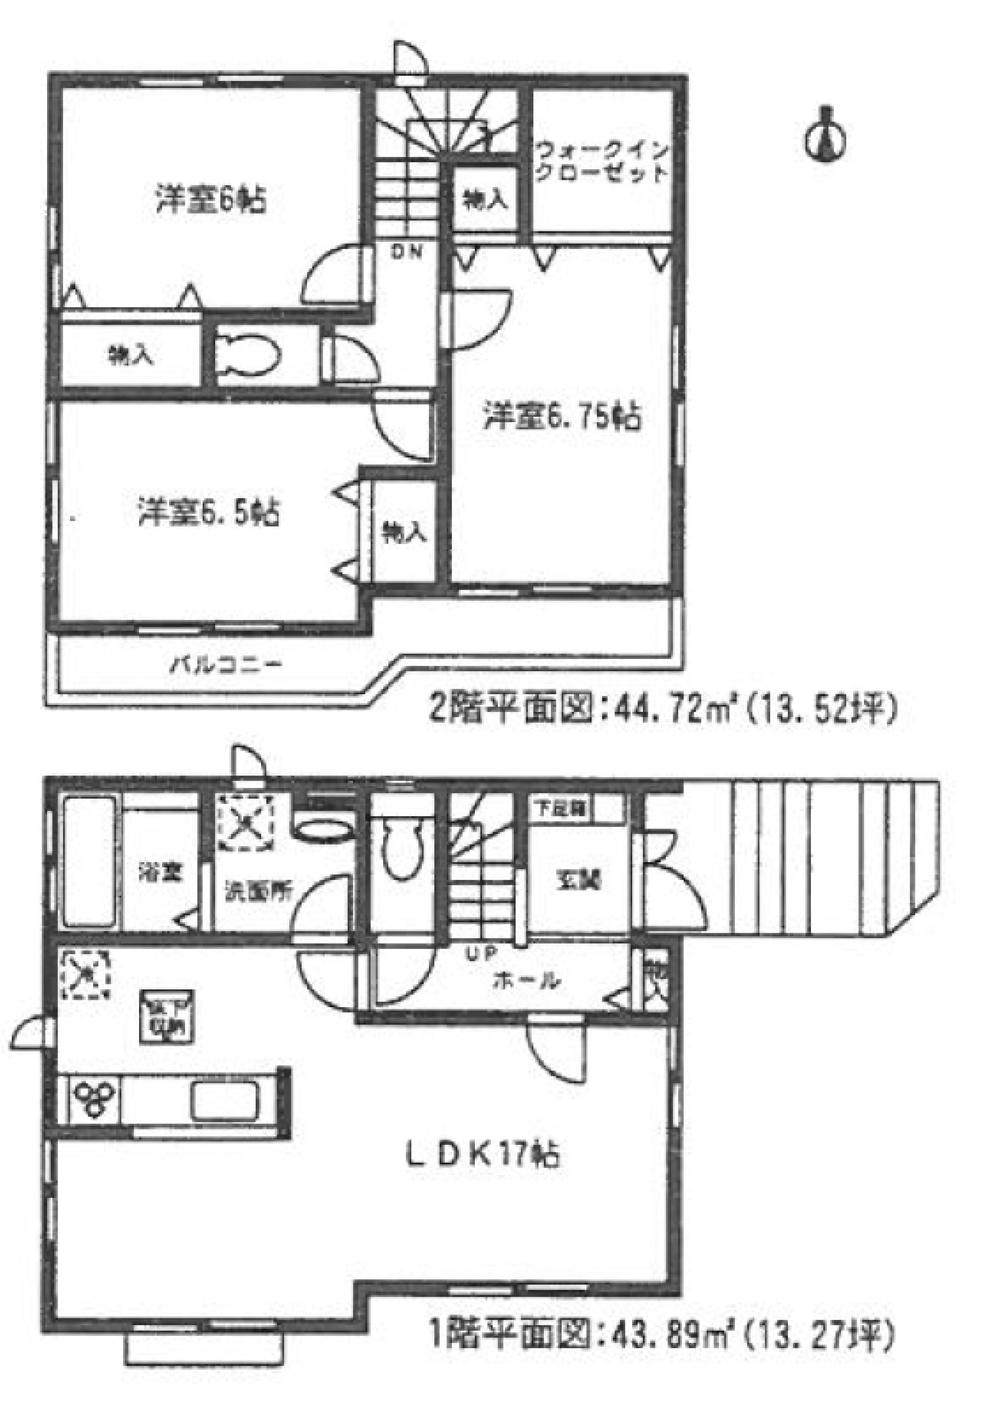 Floor plan. (1 Building), Price 28.8 million yen, 3LDK, Land area 113.04 sq m , Building area 88.61 sq m